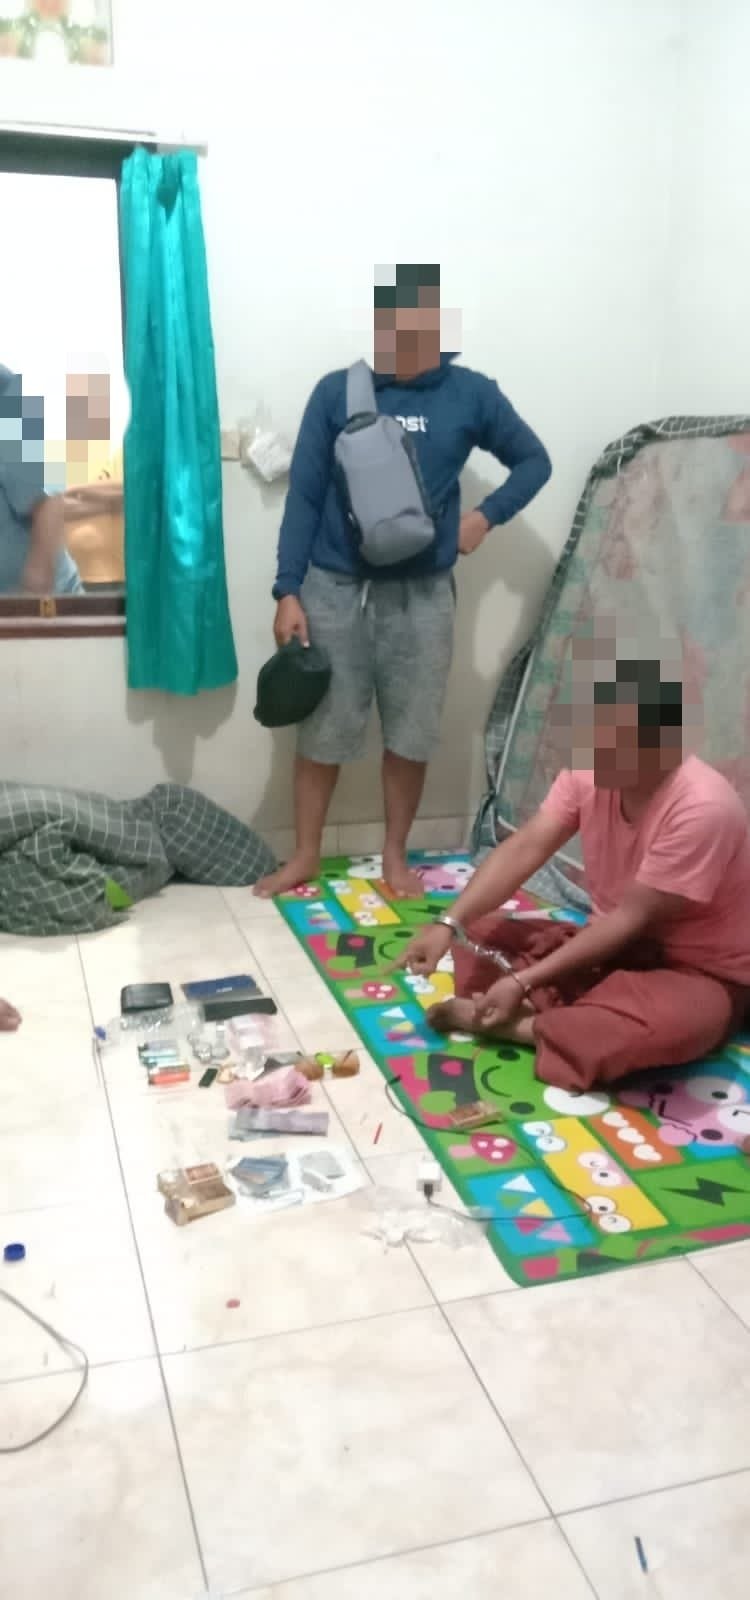 Guru Honorer dan Empat Pelaku Narkoba Ditangkap di Lombok Tengah